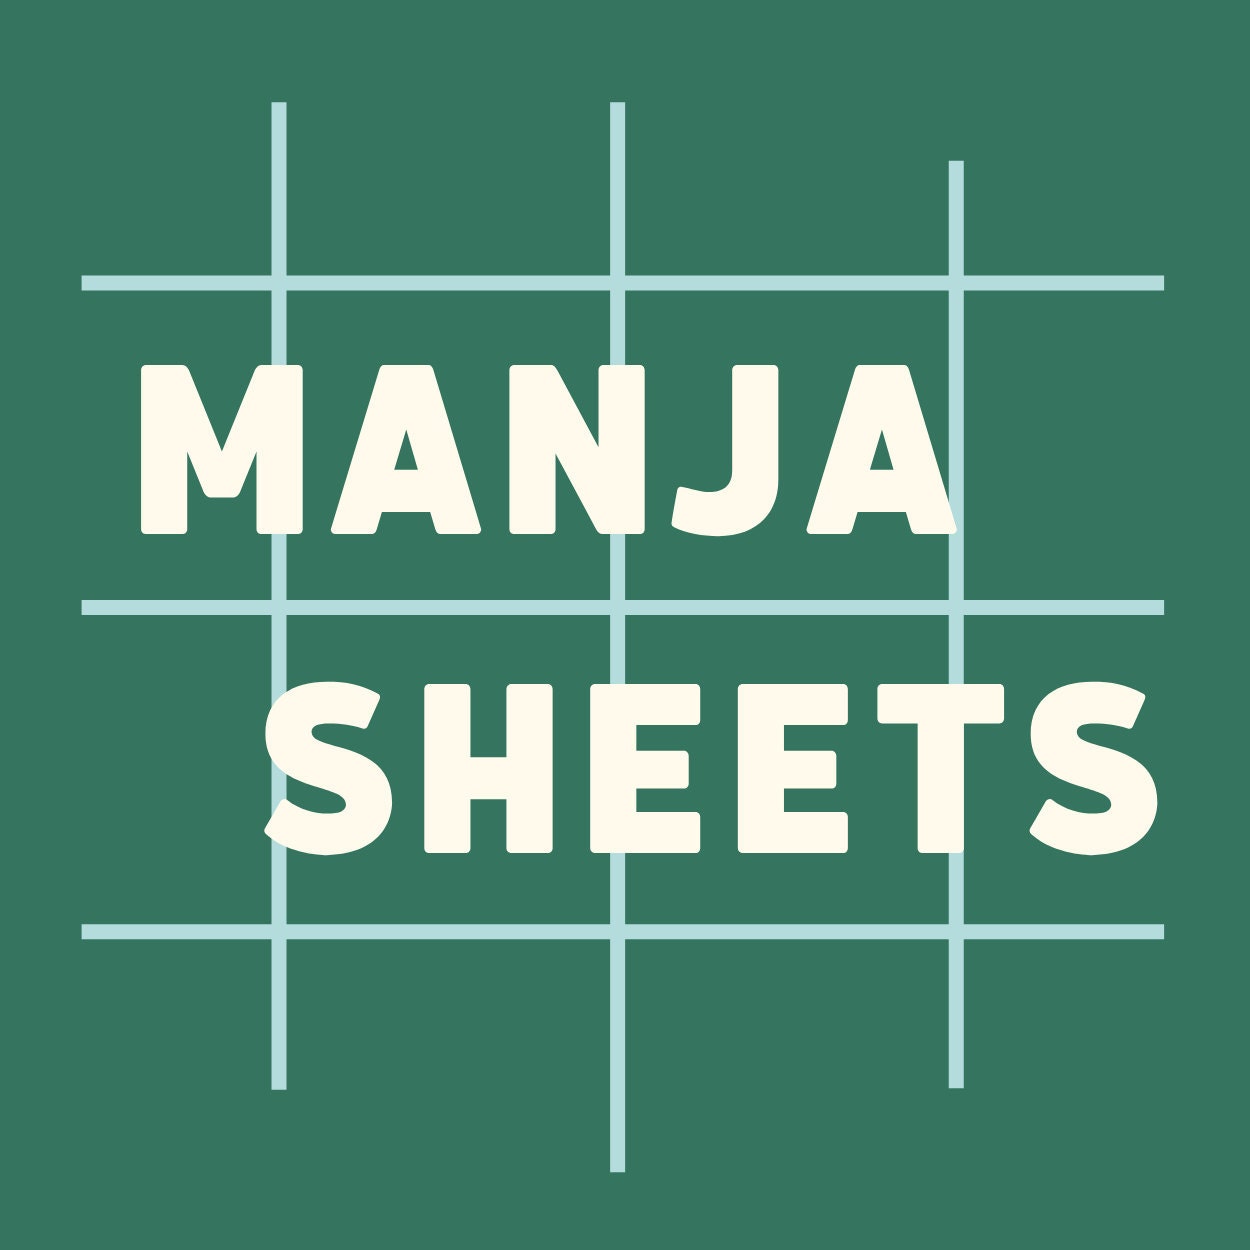 ManjaSheets